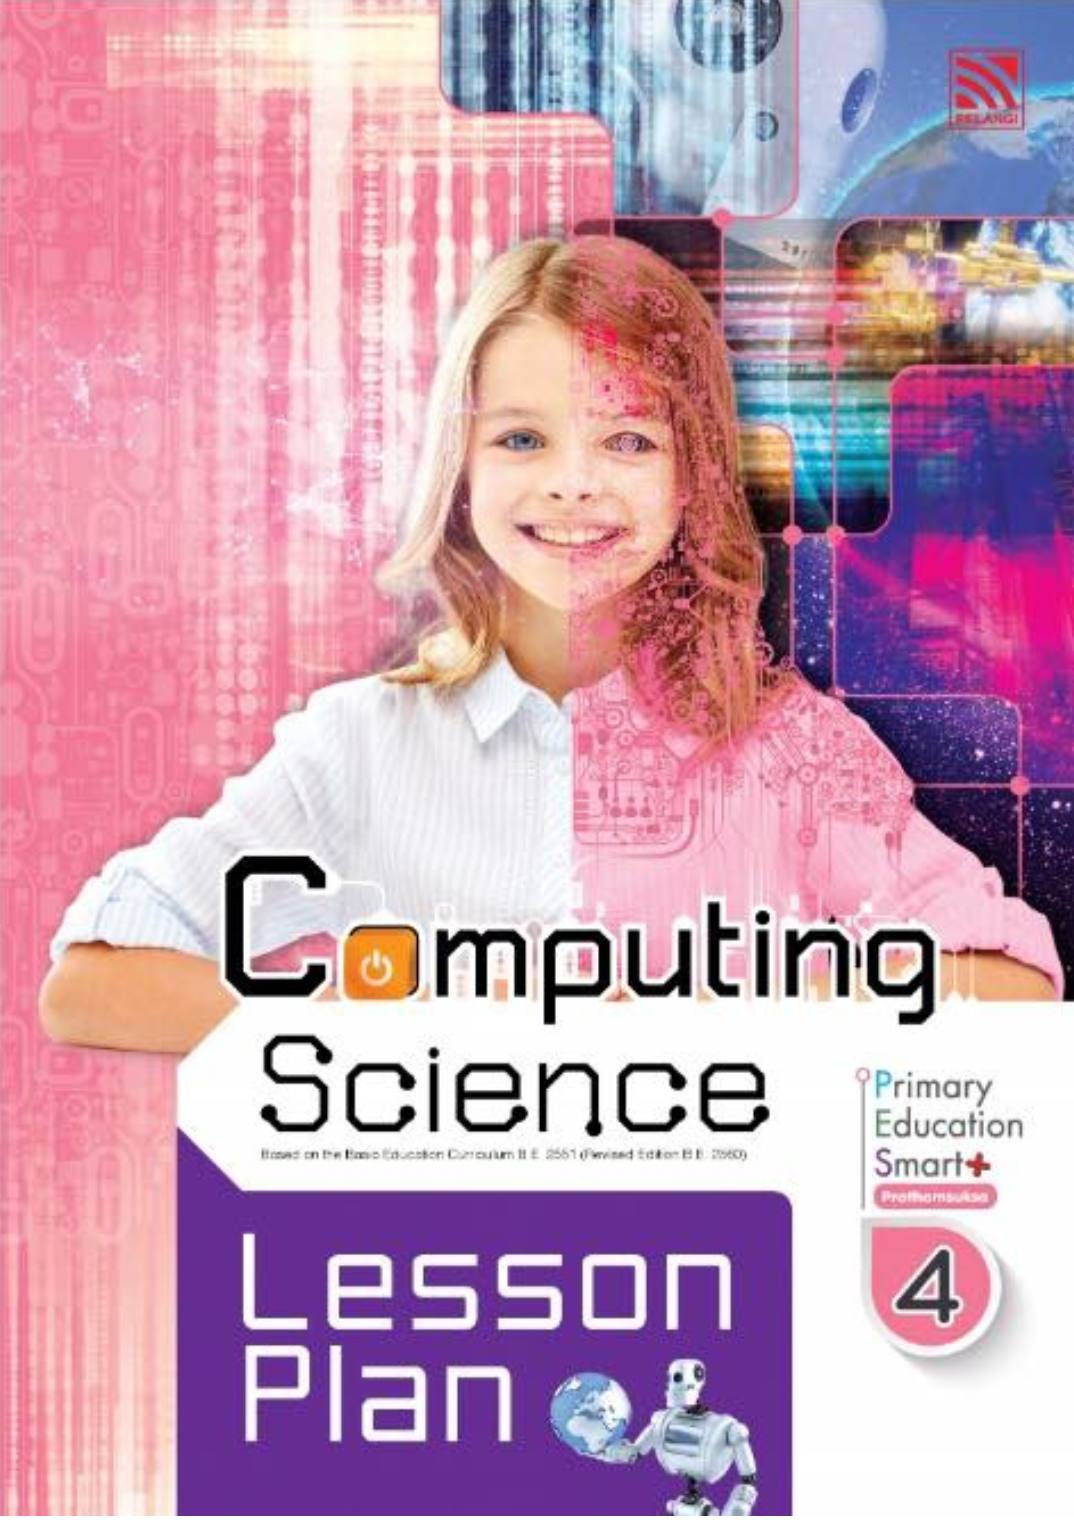 Pelangi Primary Education Smart Plus Computing Science P4 Lesson Plan